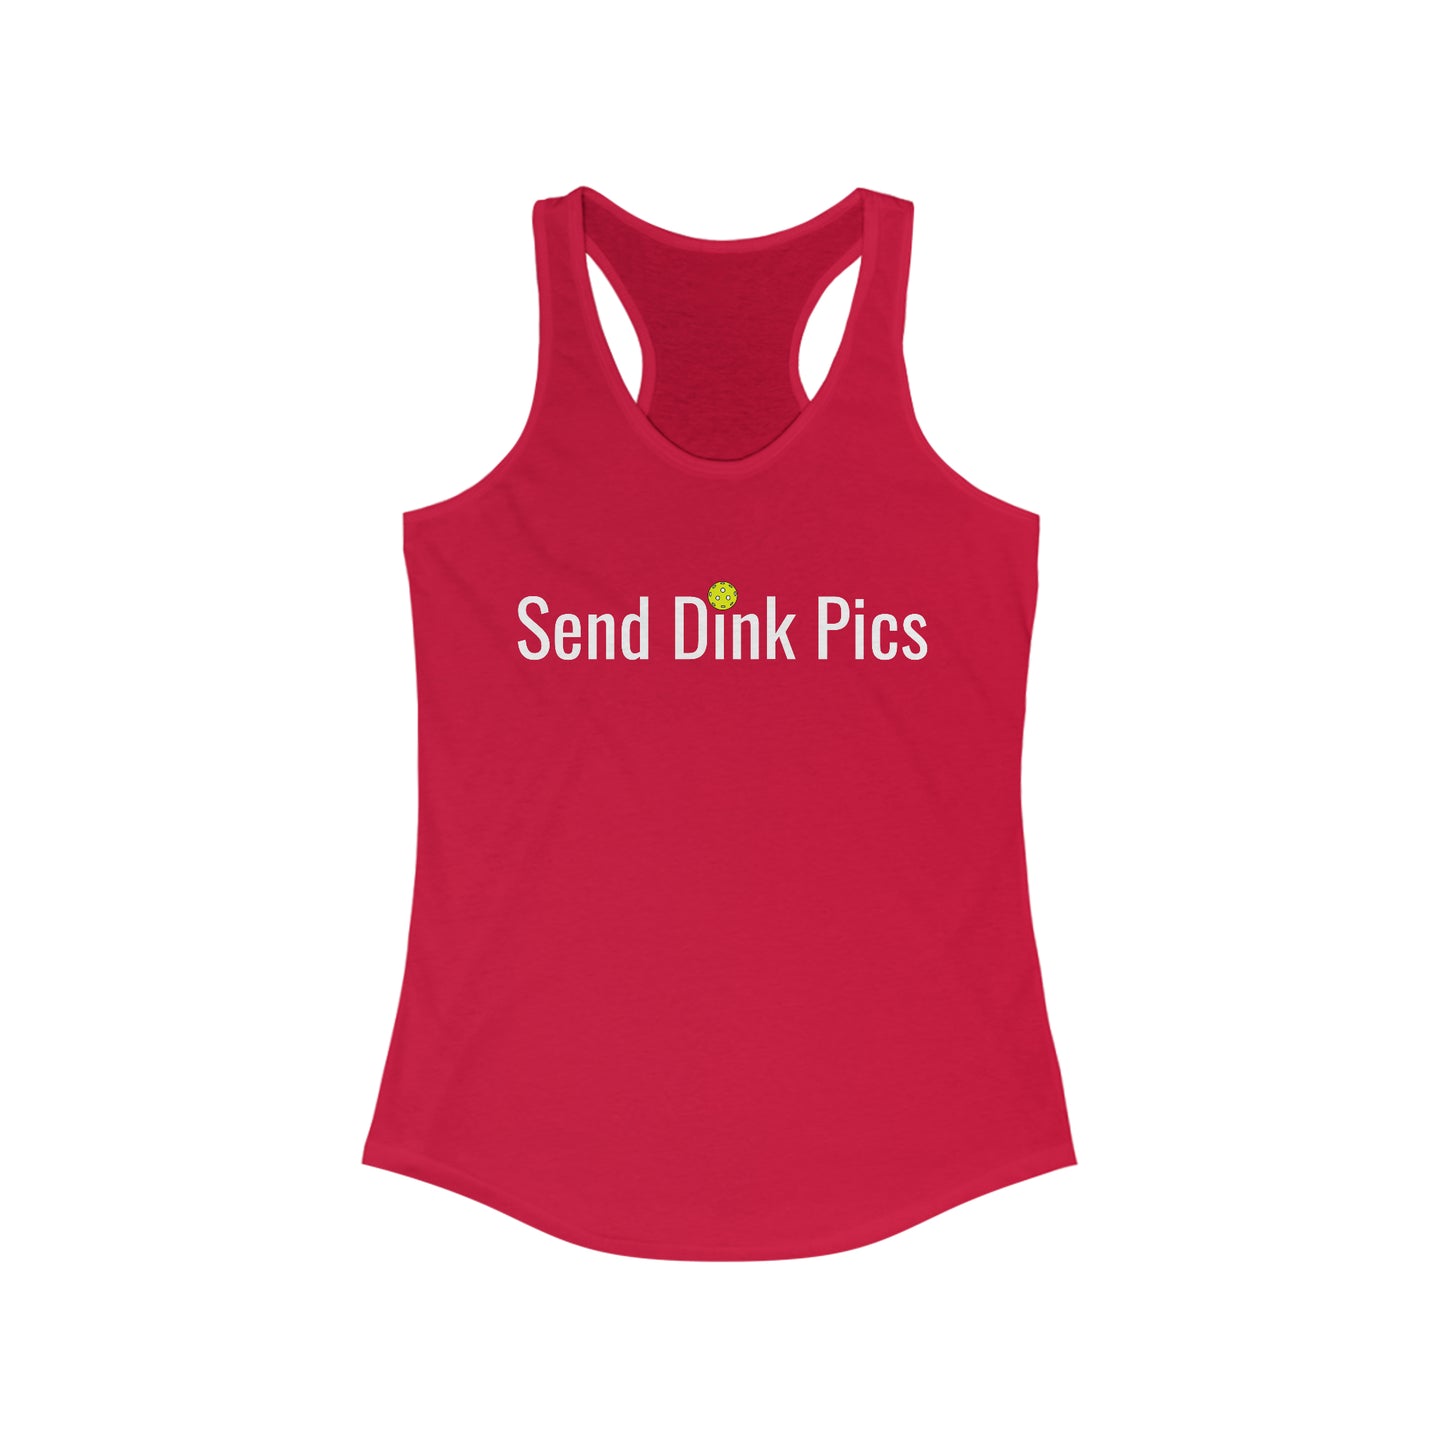 Send Dink Pics (in print) Super Cute Funny Racerback Pickleball Tank Top